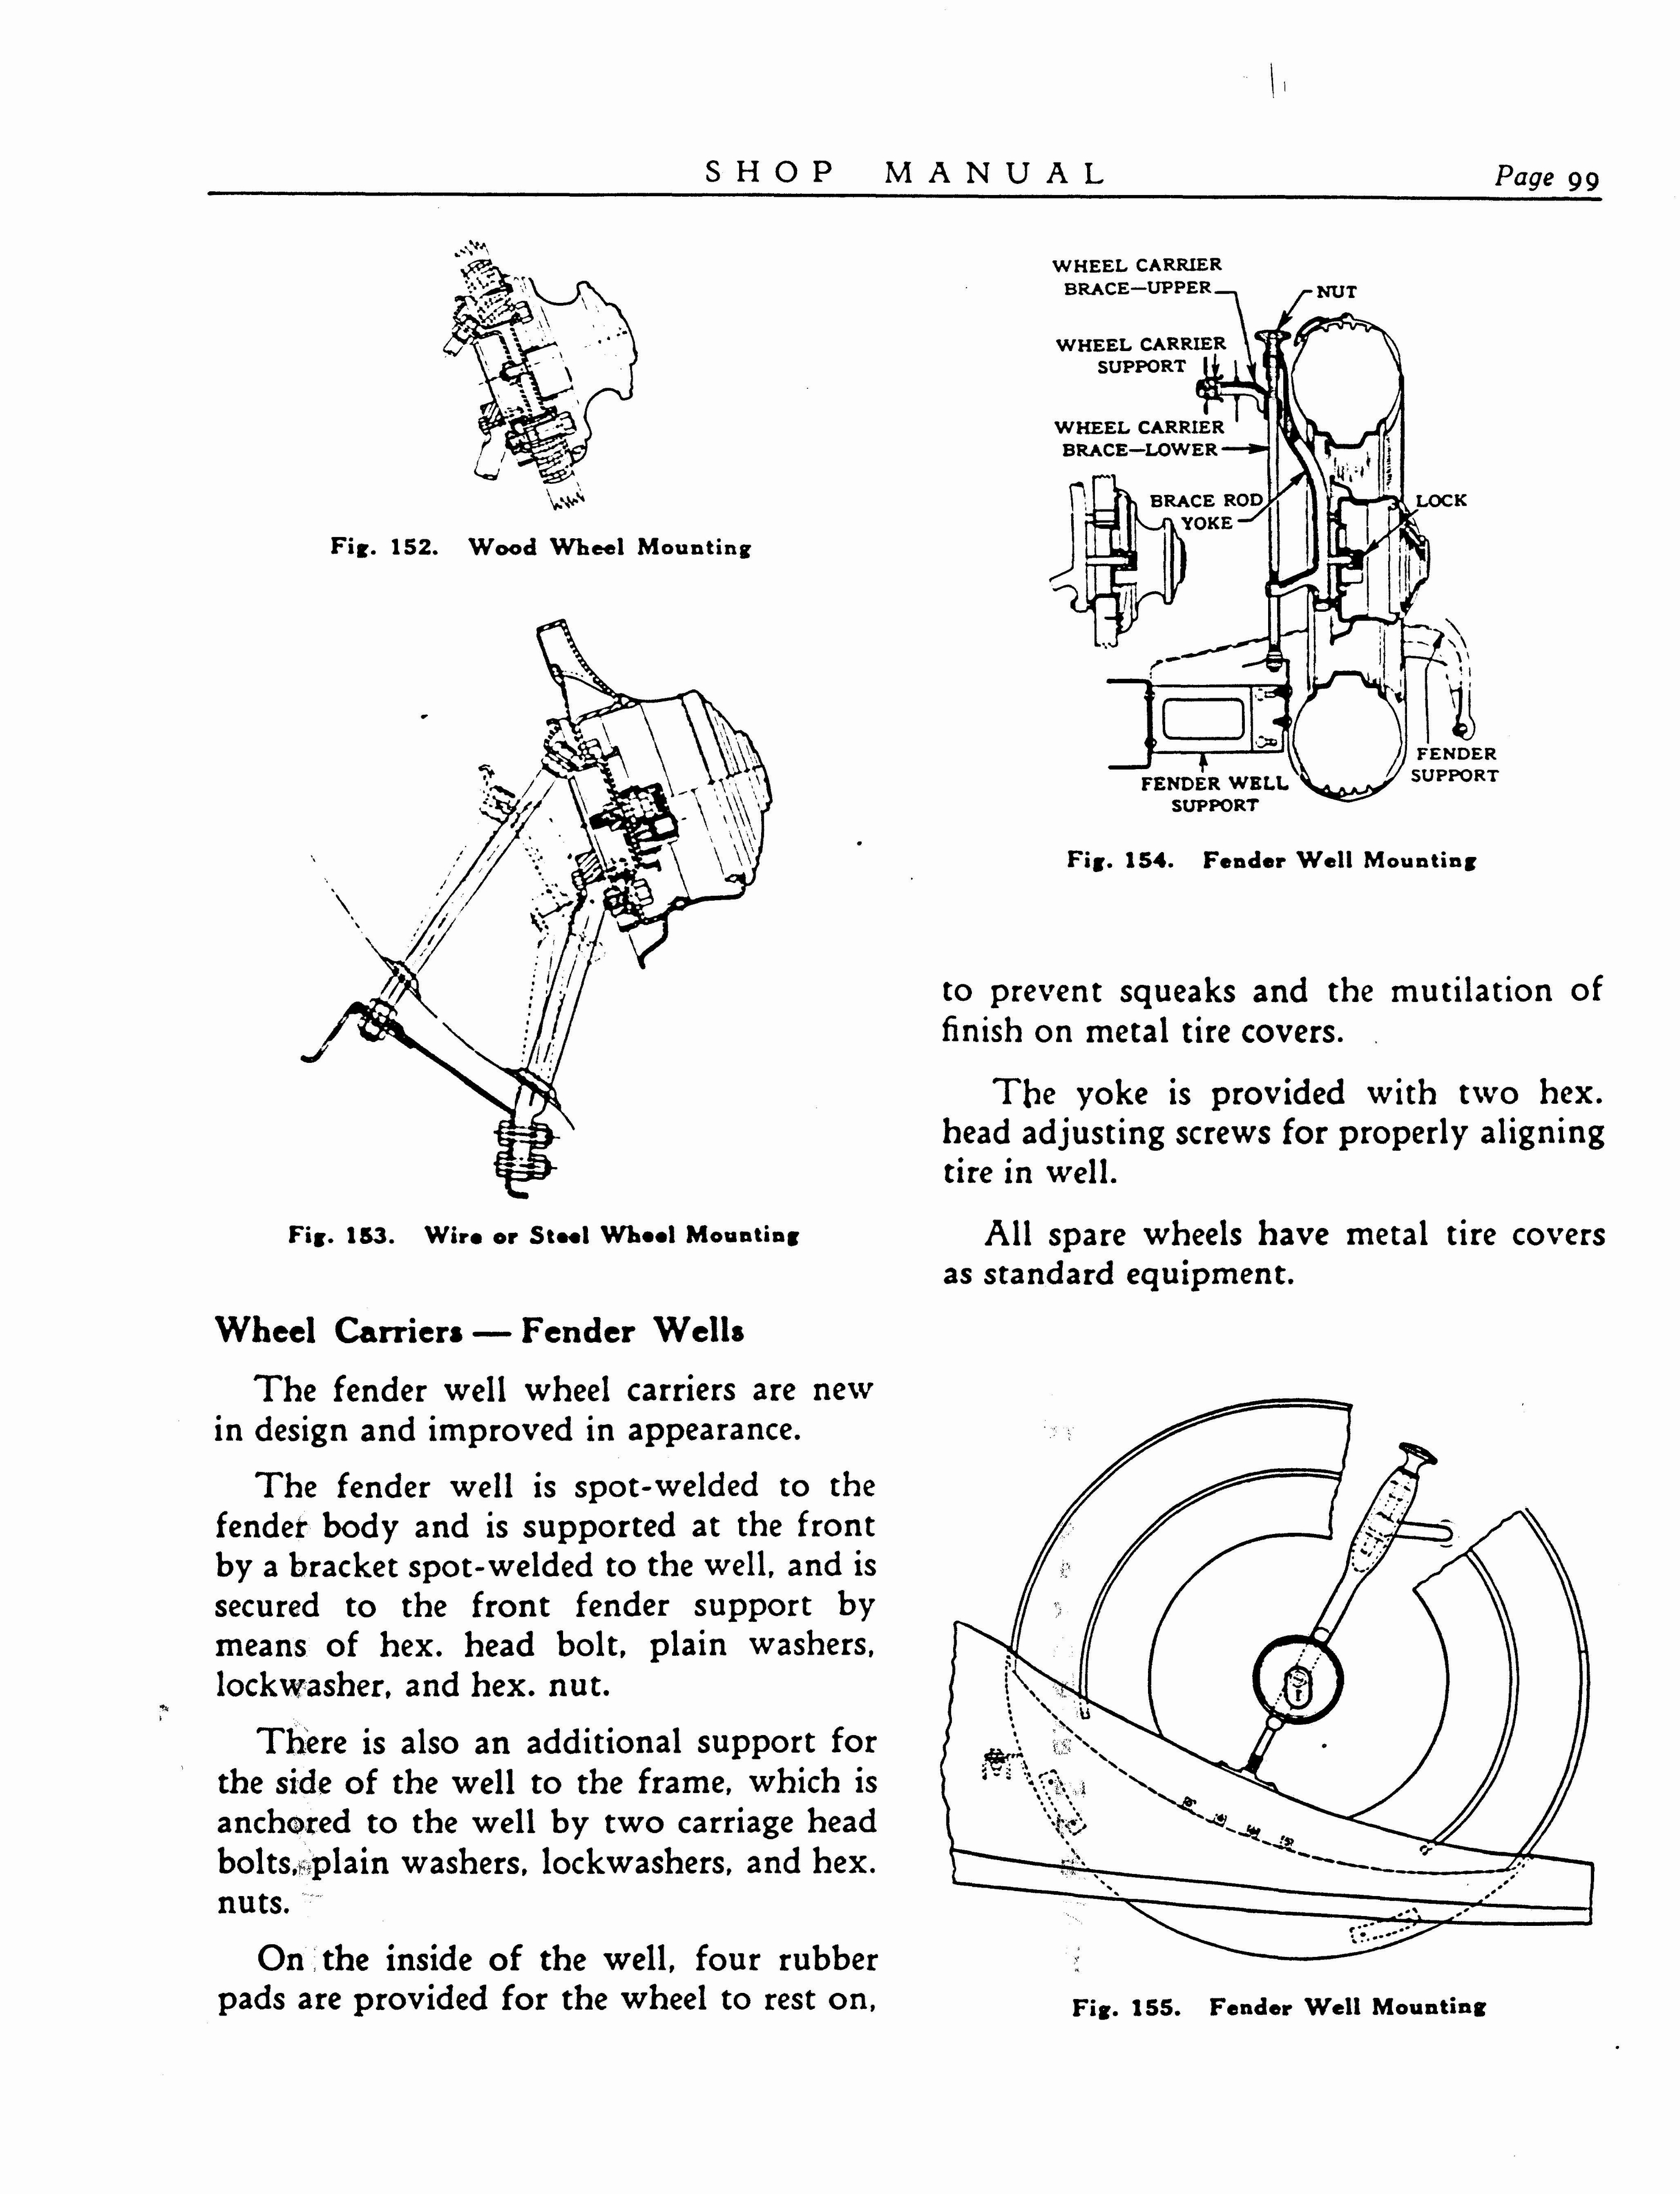 n_1933 Buick Shop Manual_Page_100.jpg